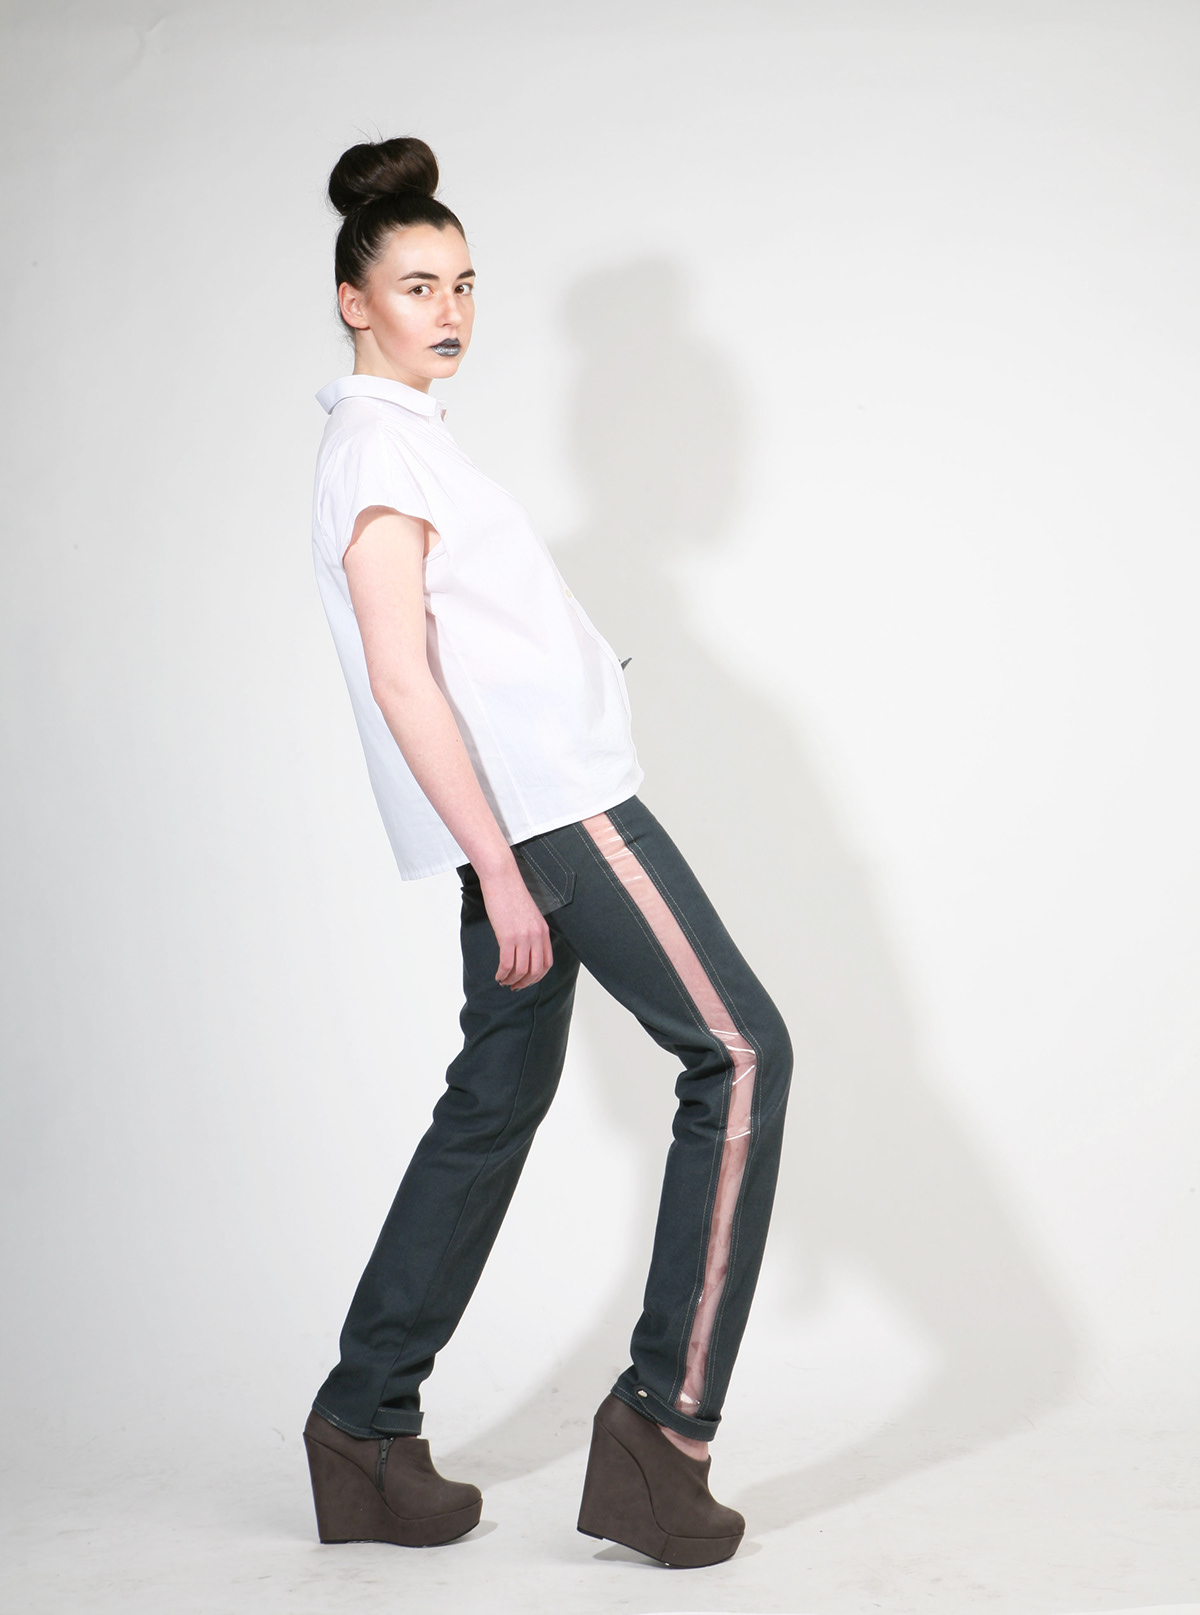 jeans Plastic Fashion  casualwear Denim Design  Andrew Bell NCAD Fashion   design